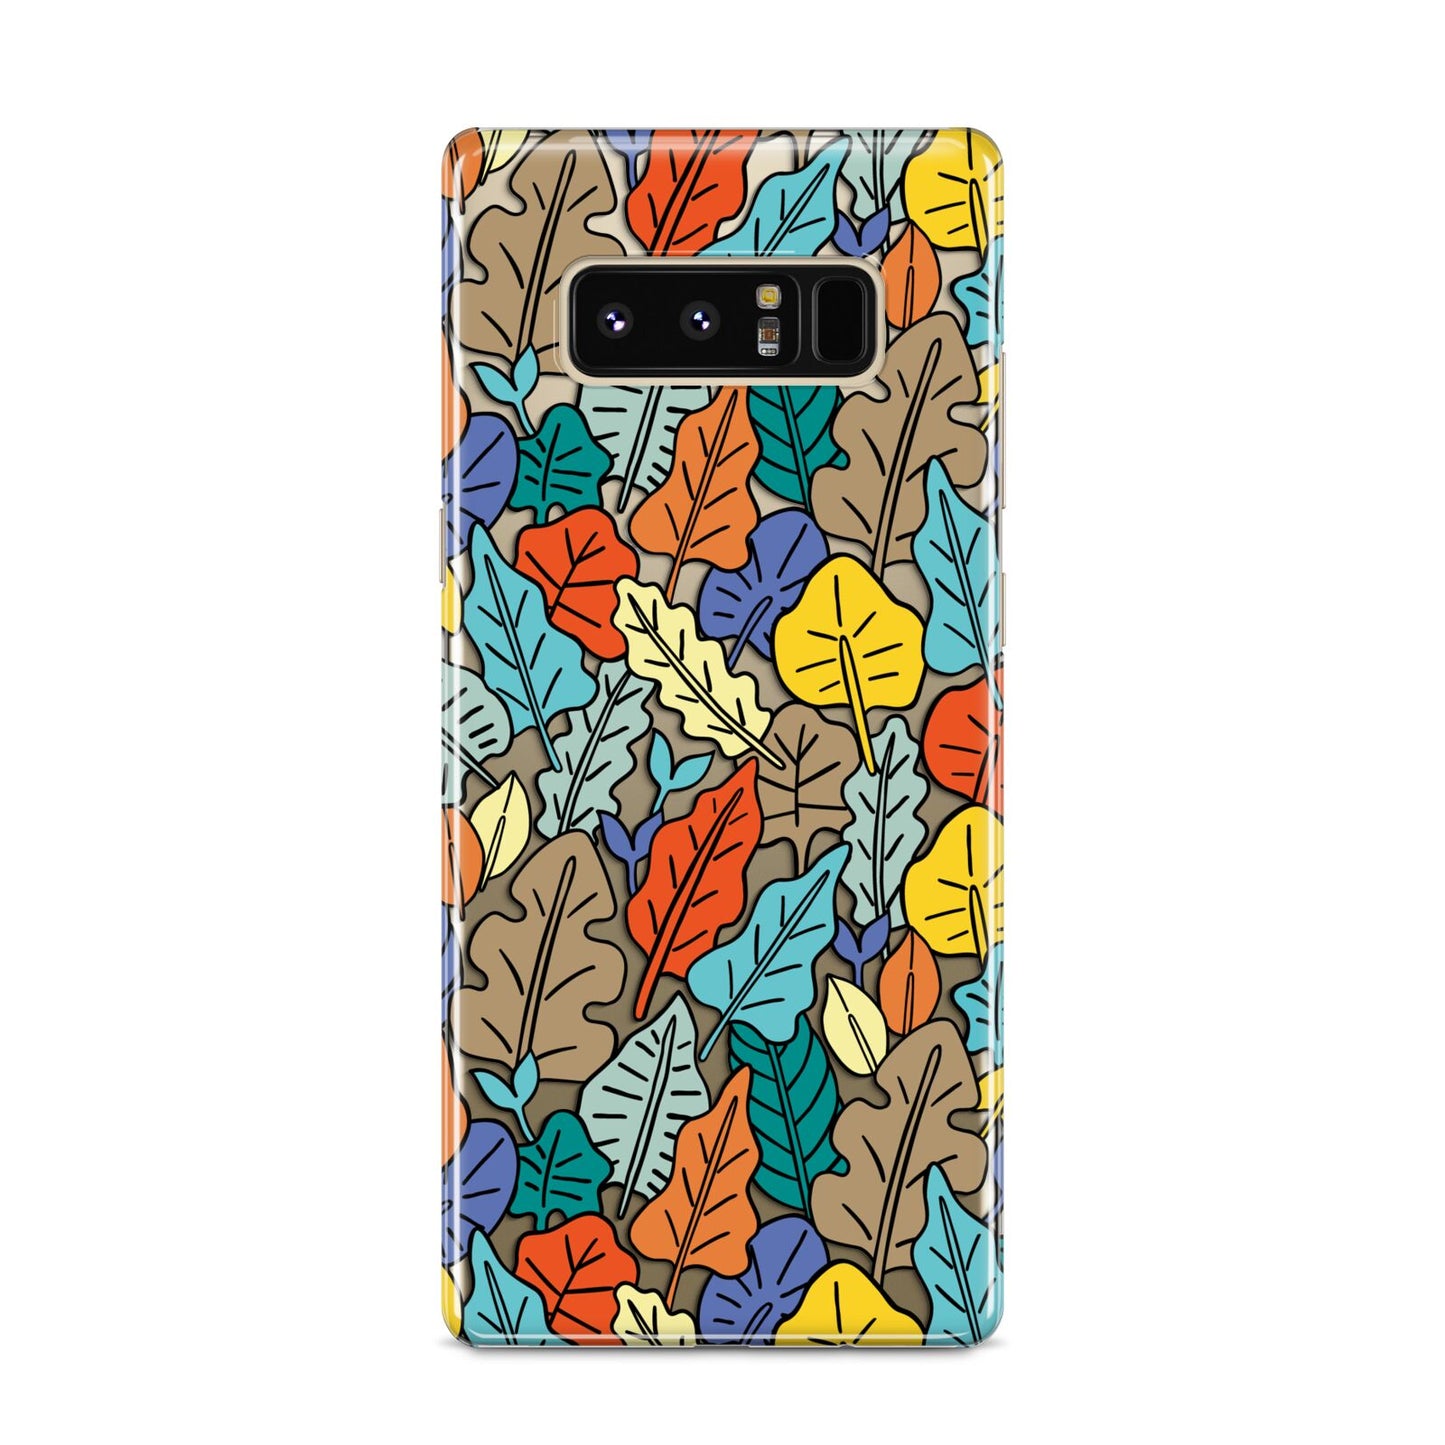 Autumn Leaves Samsung Galaxy S8 Case